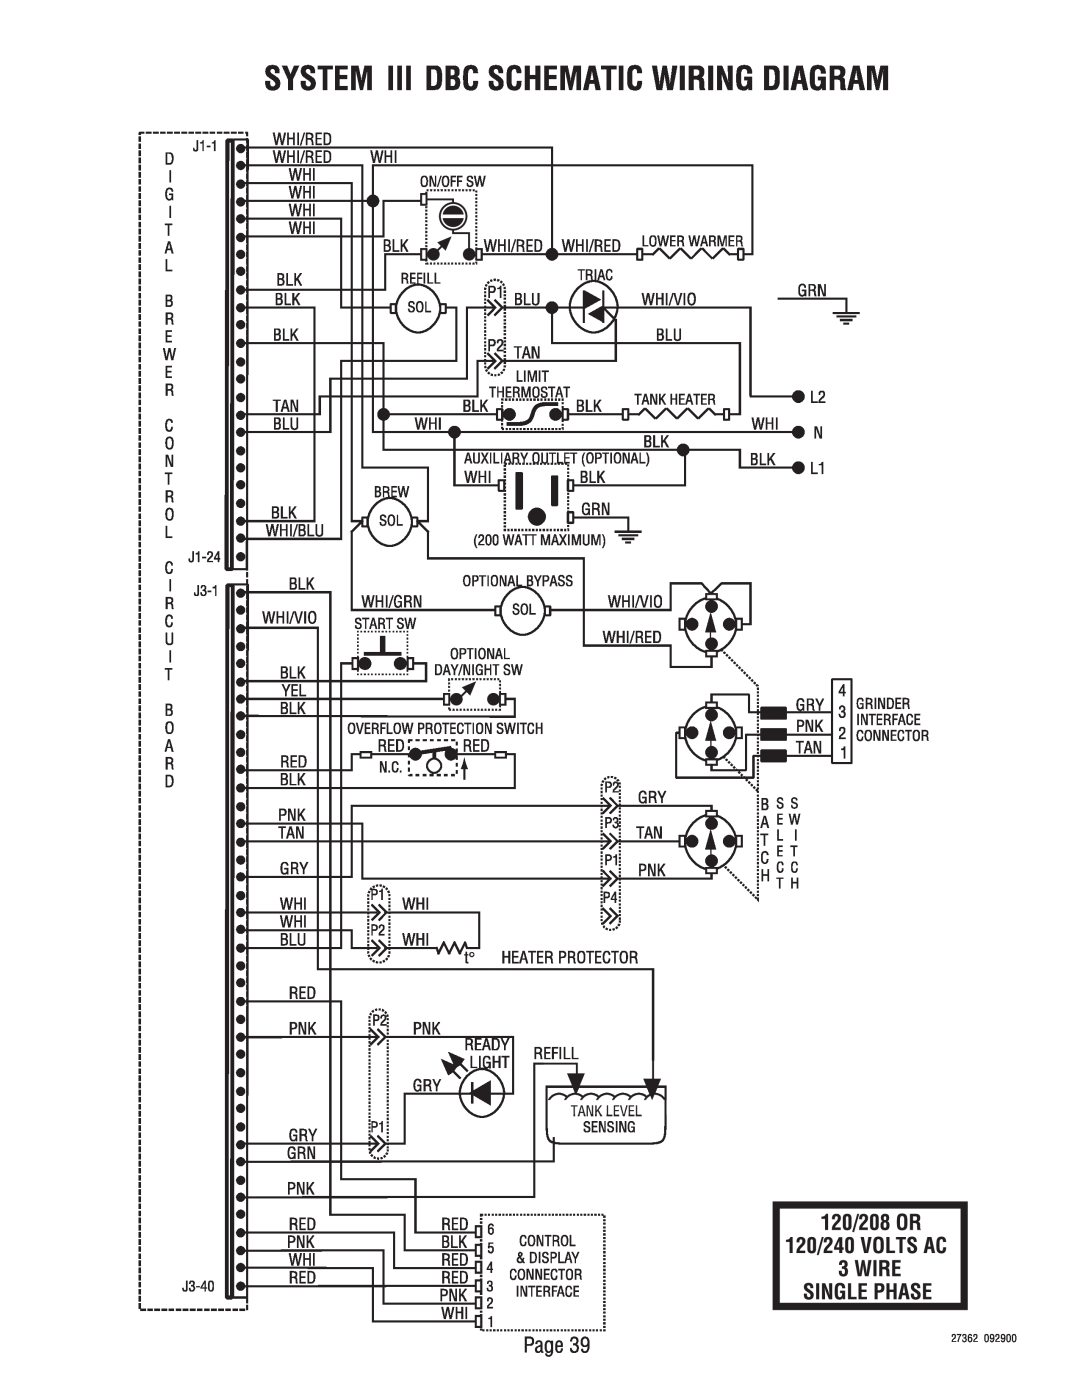 Bunn System III manual Page, 27362, 092900 